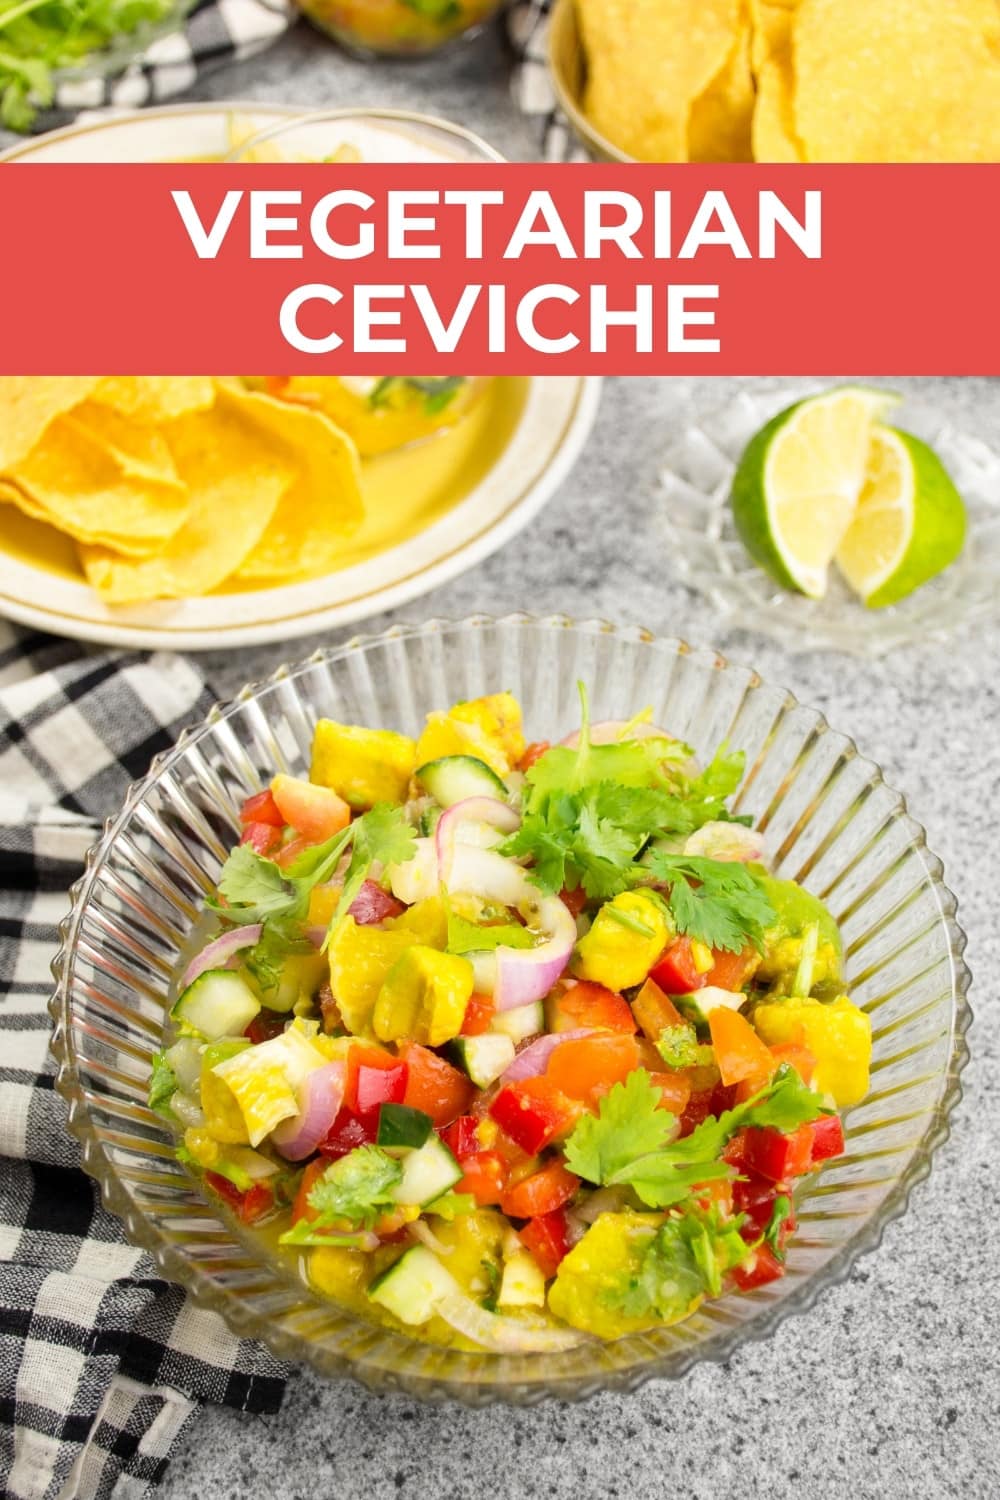 peruvian no meat vegetable ceviche recipe